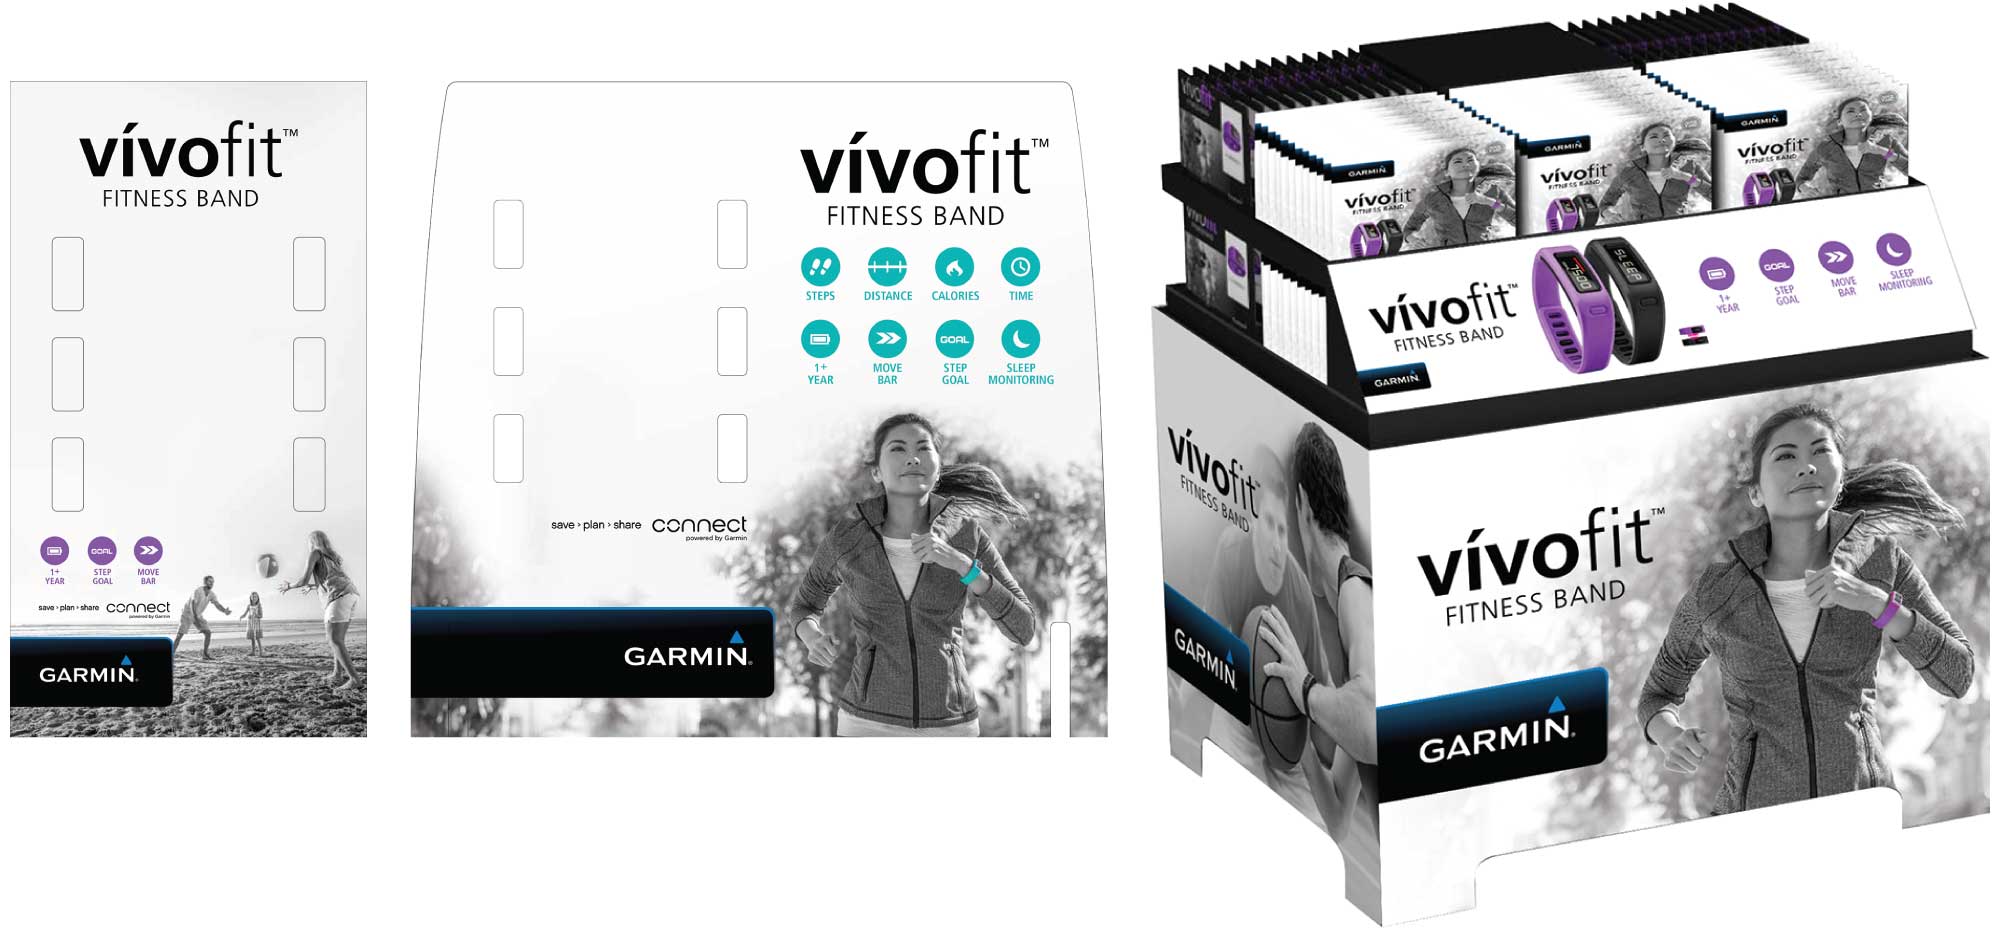 Garmin vivofit merchandising elements